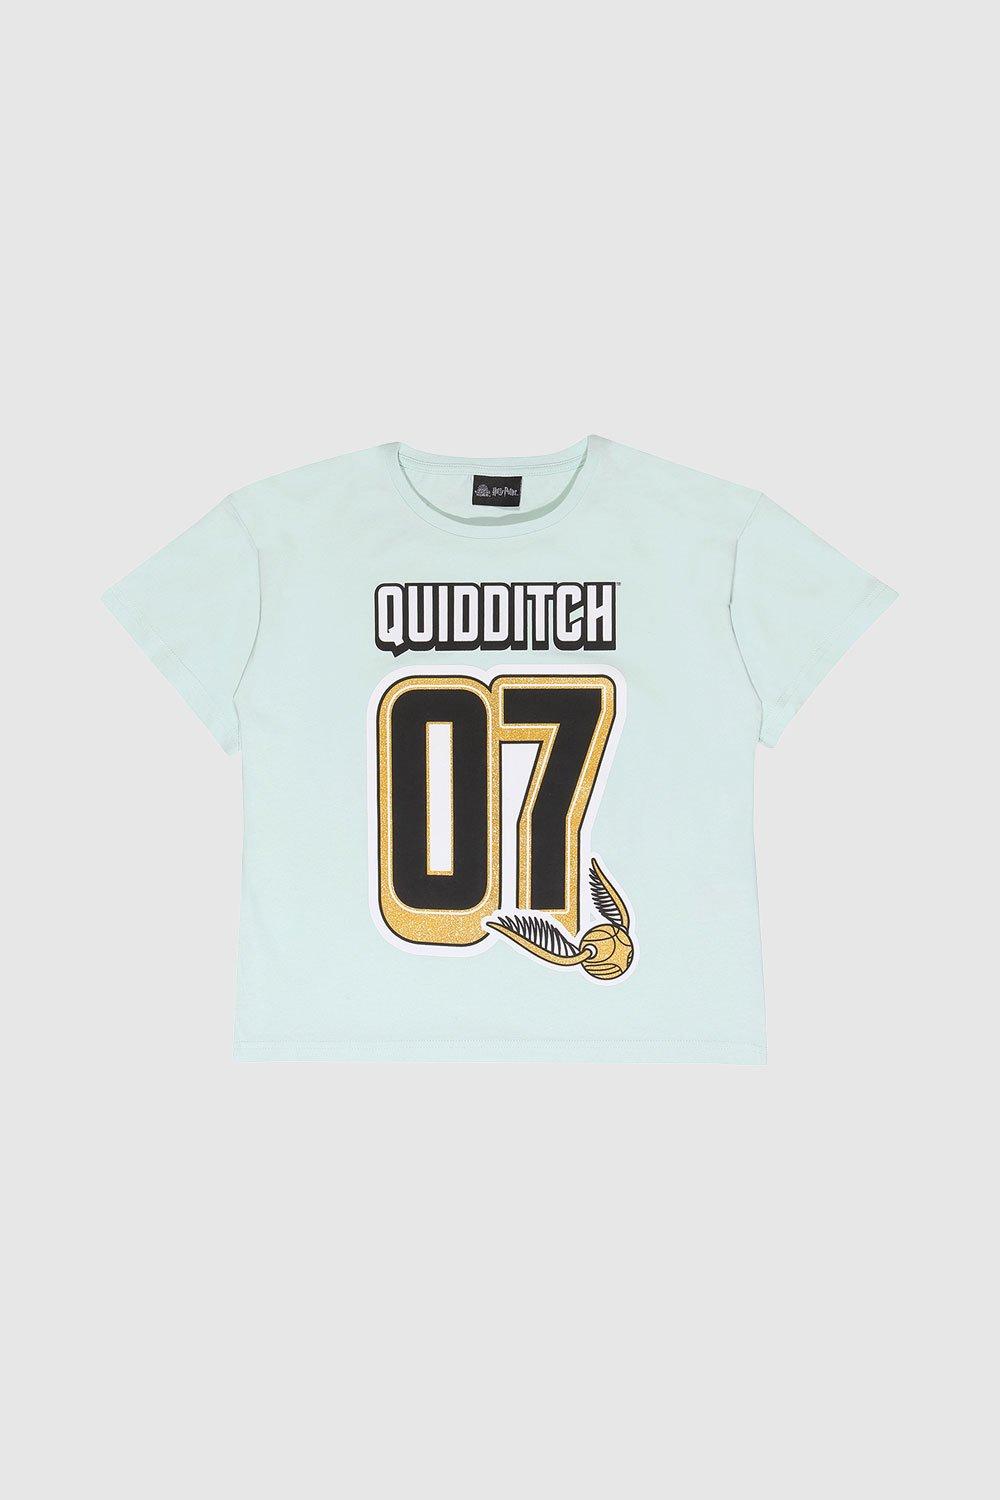 Quidditch 07 Golden Snitch T-Shirt